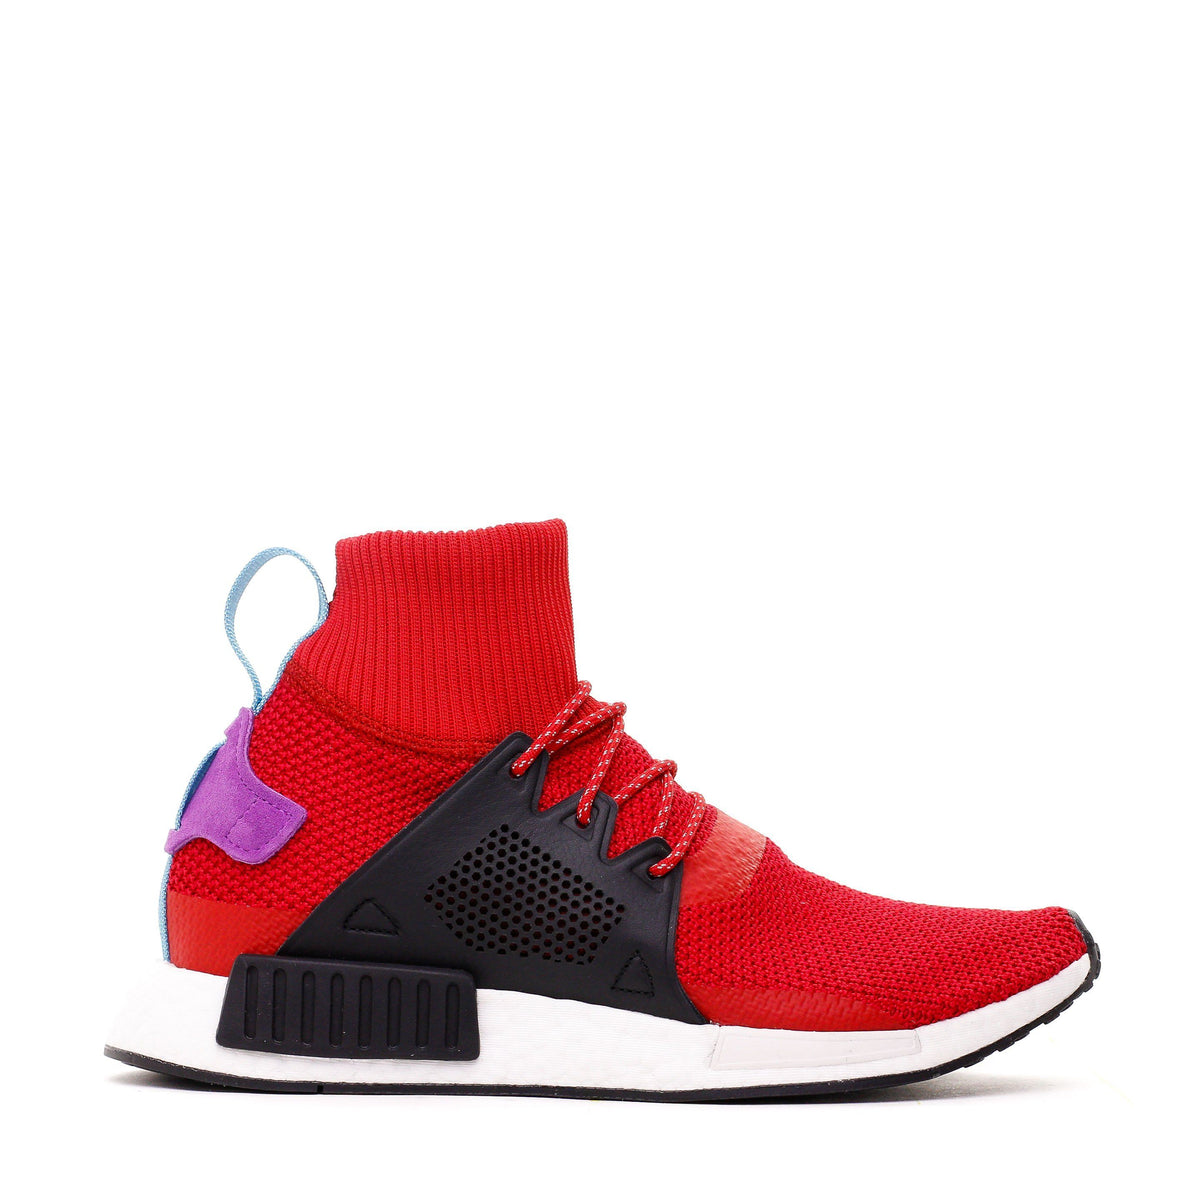 grænseflade Min akavet adidas handbags for feet and toes shoes | Adidas Originals NMD XR1 Winter  Scarlet Red Black Boost BZ0632